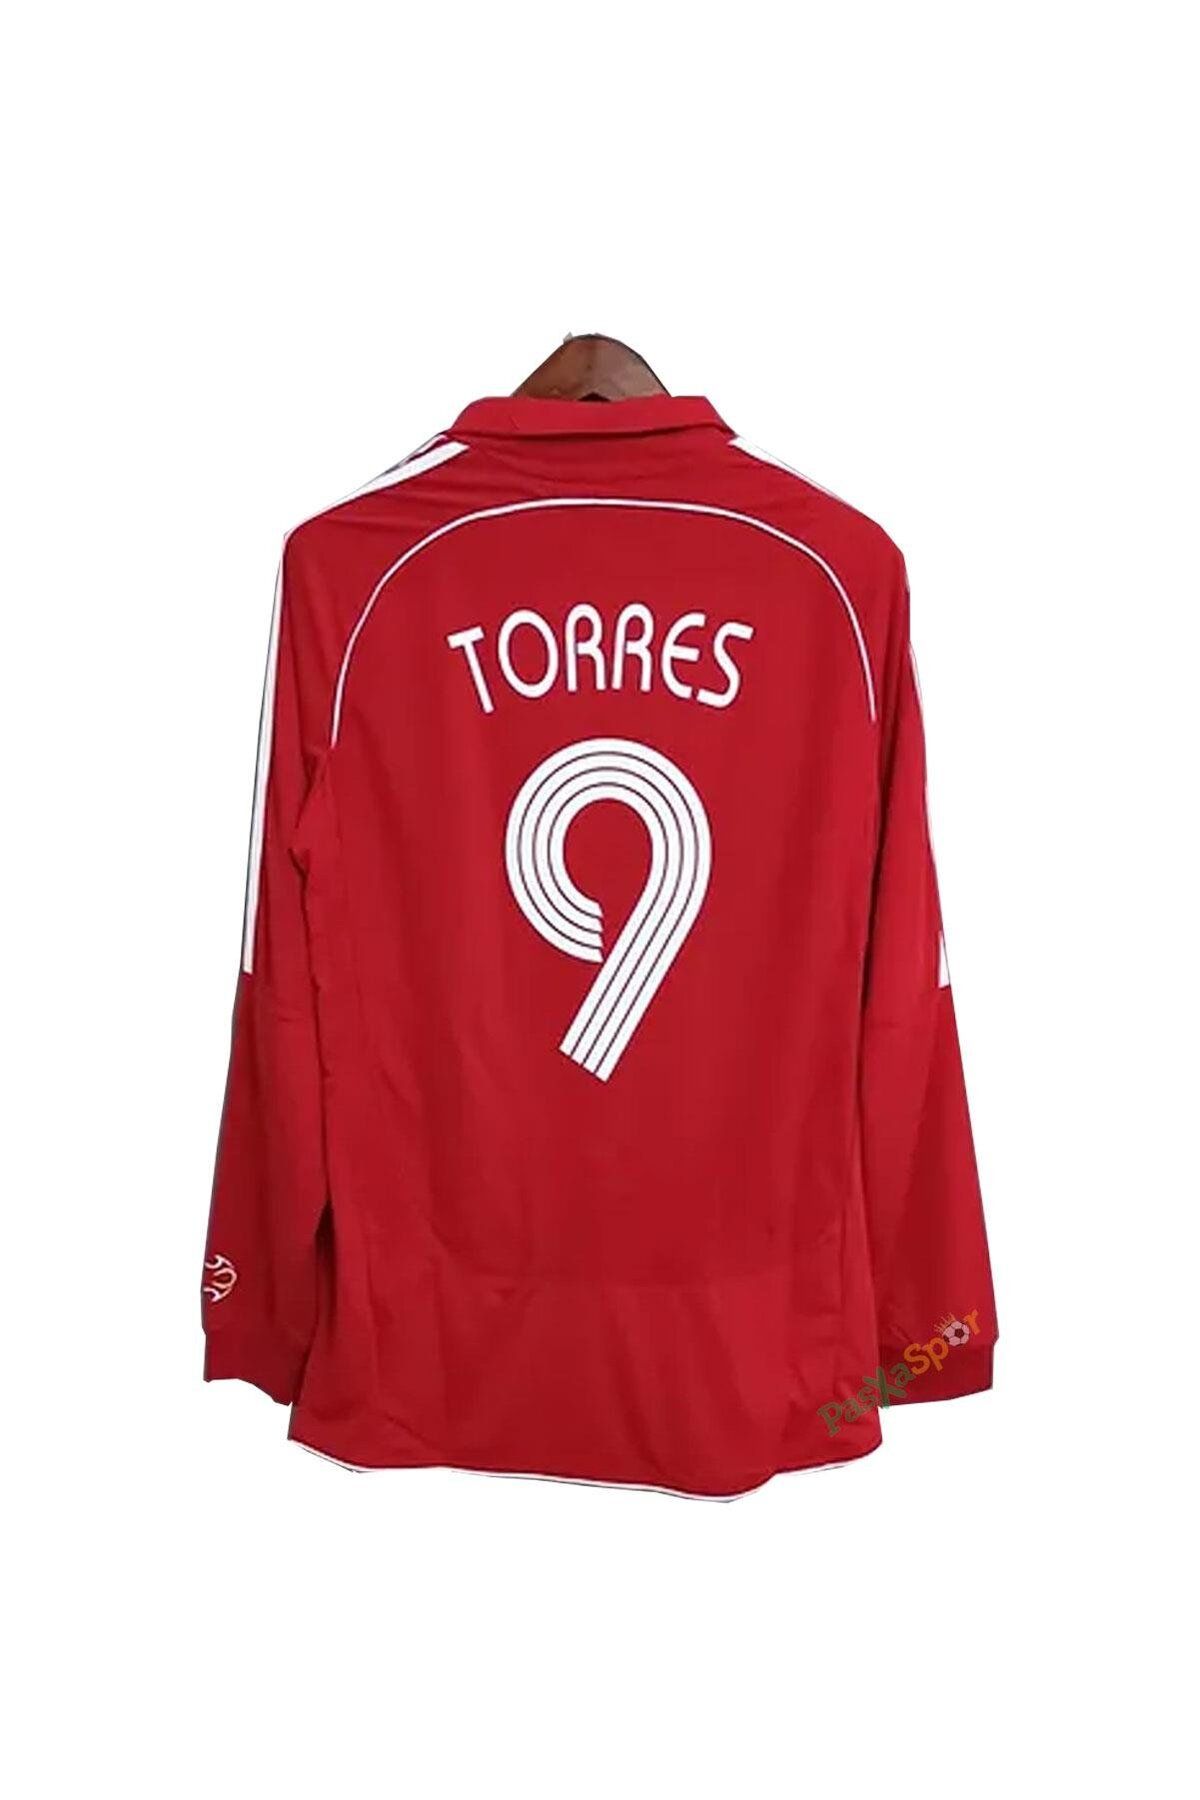 Pasxaspor Profesyonel İthal Kalite Torres Liverpool 2007 Sezonu Şampiyonlar Ligi Finali Uzun Kol Forması